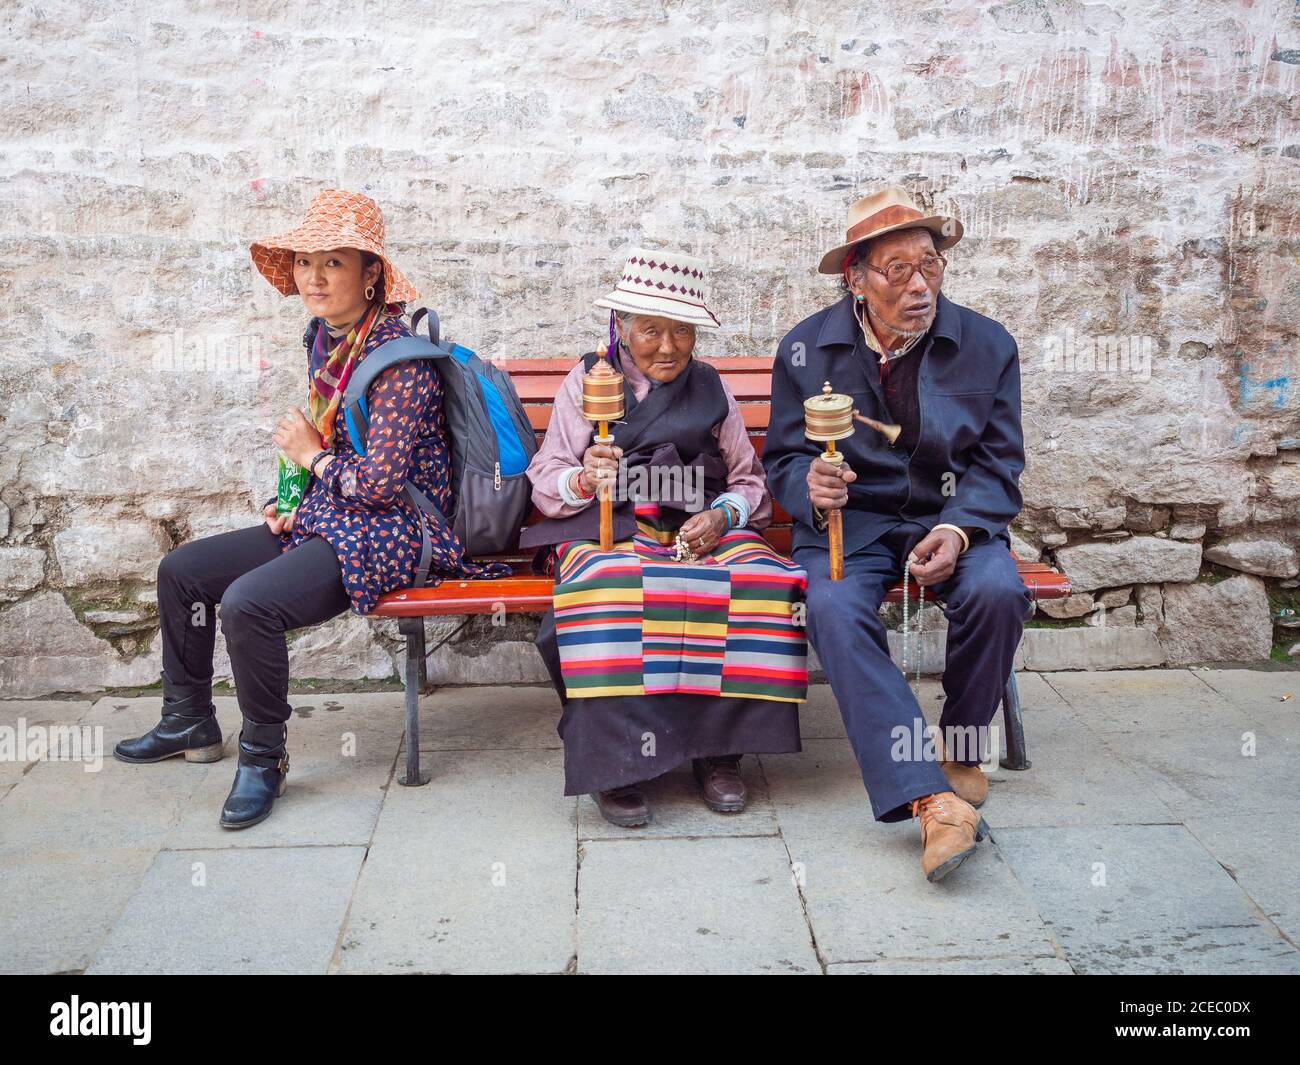 Tibet - August, 29 2014: Ethnic people sitting on street bench Stock Photo